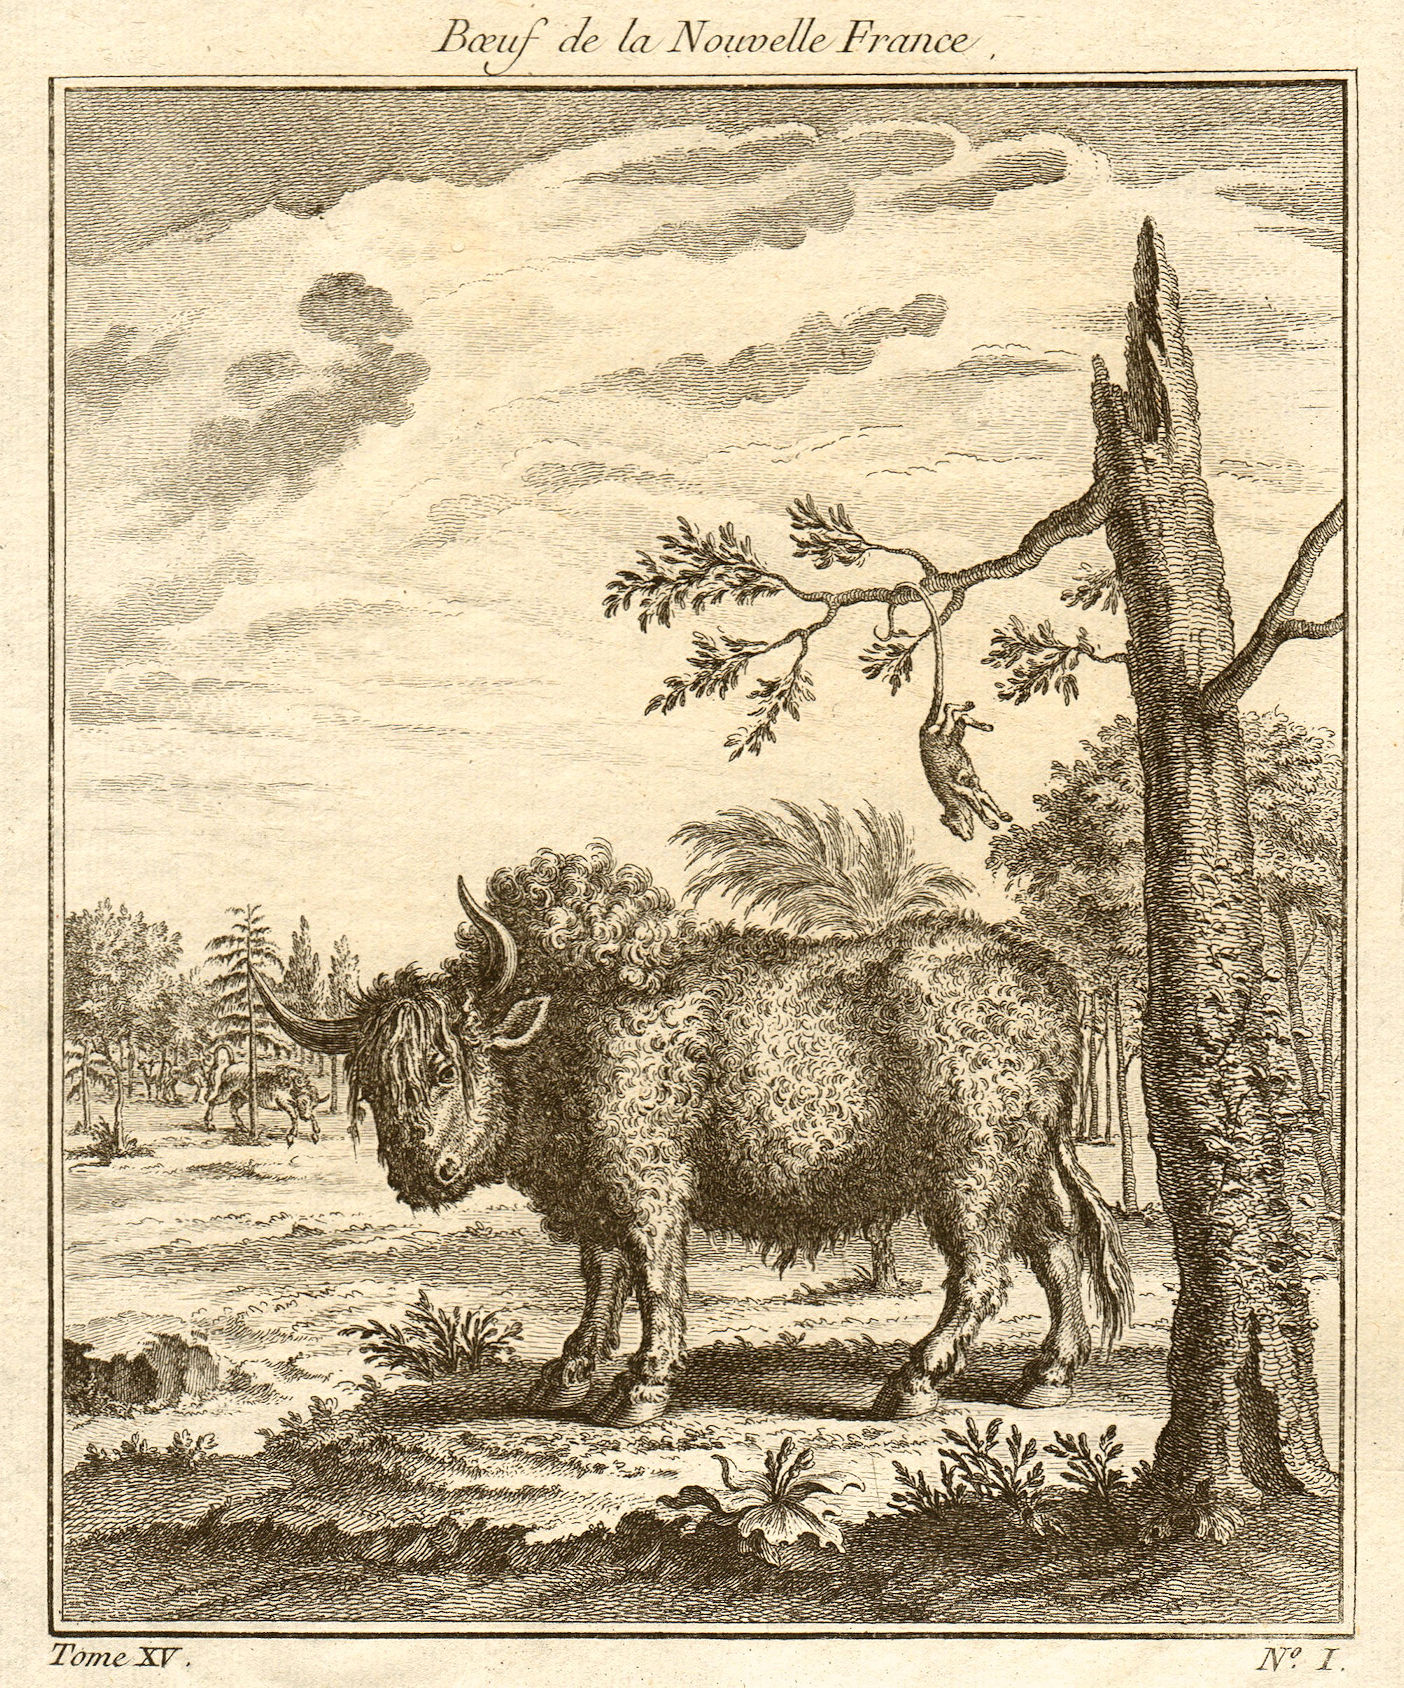 Associate Product 'Boeuf de la Nouvelle France'. Bull from New France / Canada. Quebec 1759